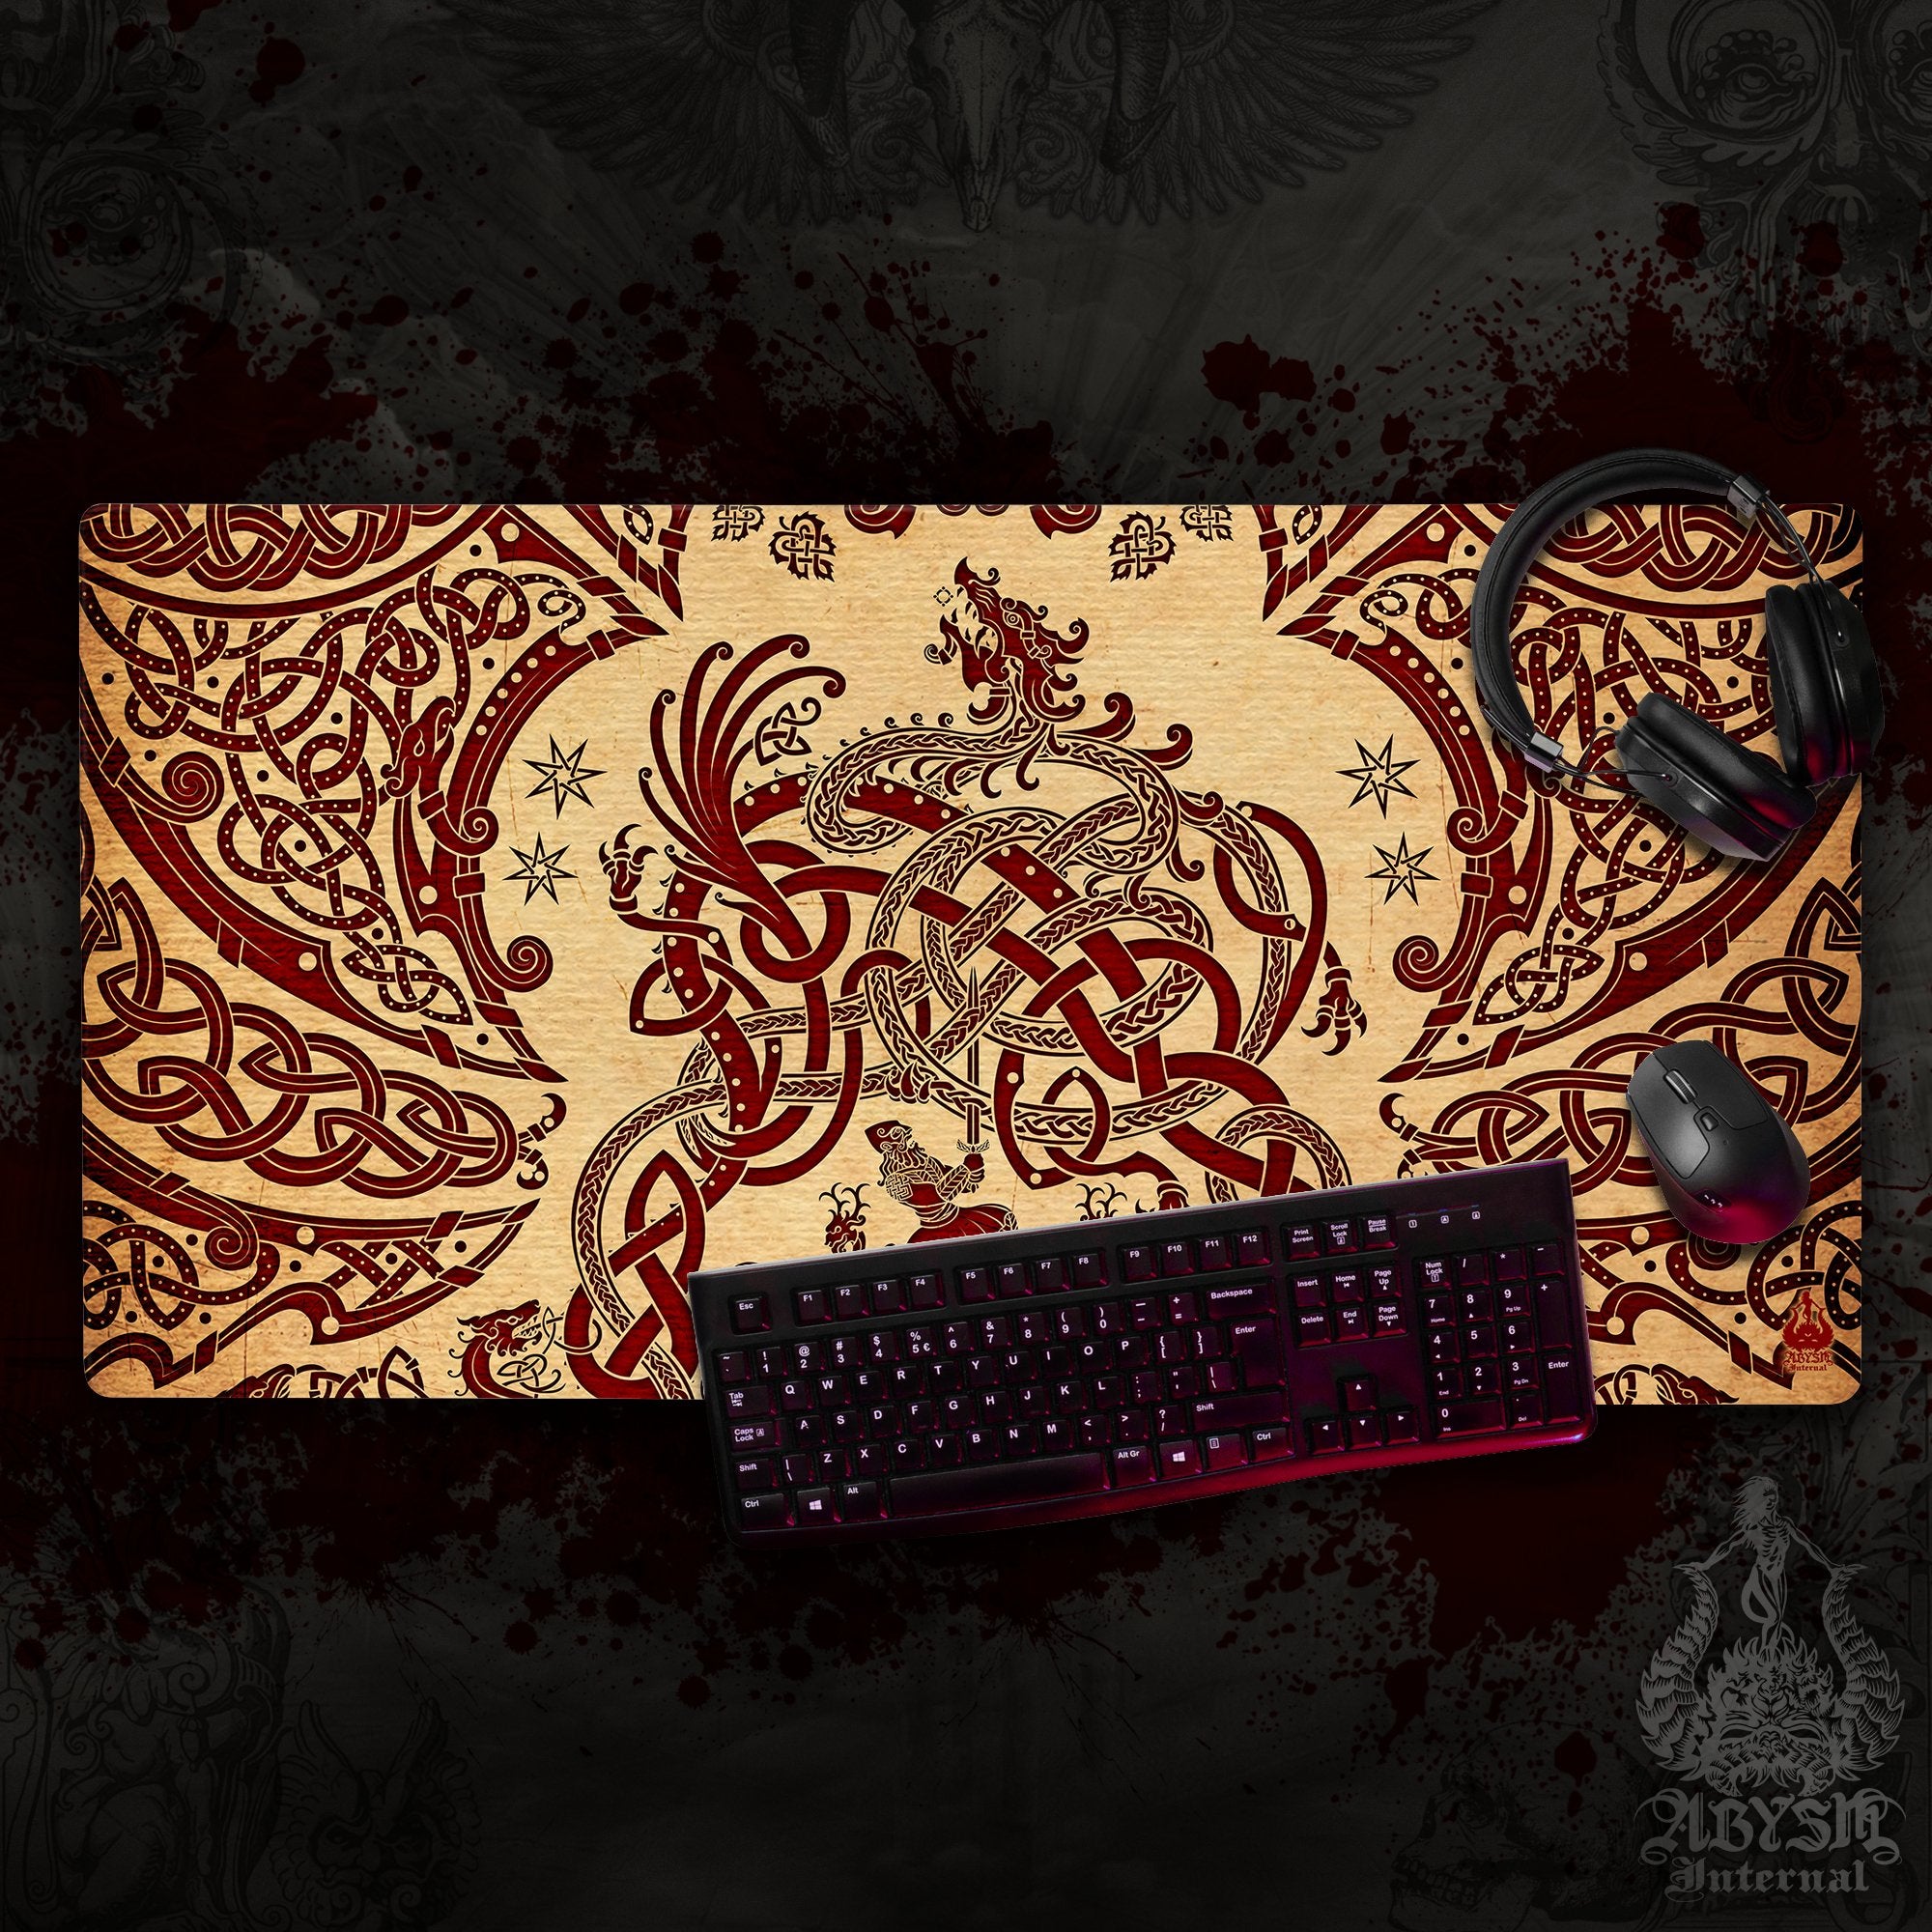 Norse Dragon Mouse Pad, Viking Gaming Desk Mat, Nordic Knotwork Workpad, Fafnir Table Protector Cover, Art Print - Paper - Abysm Internal